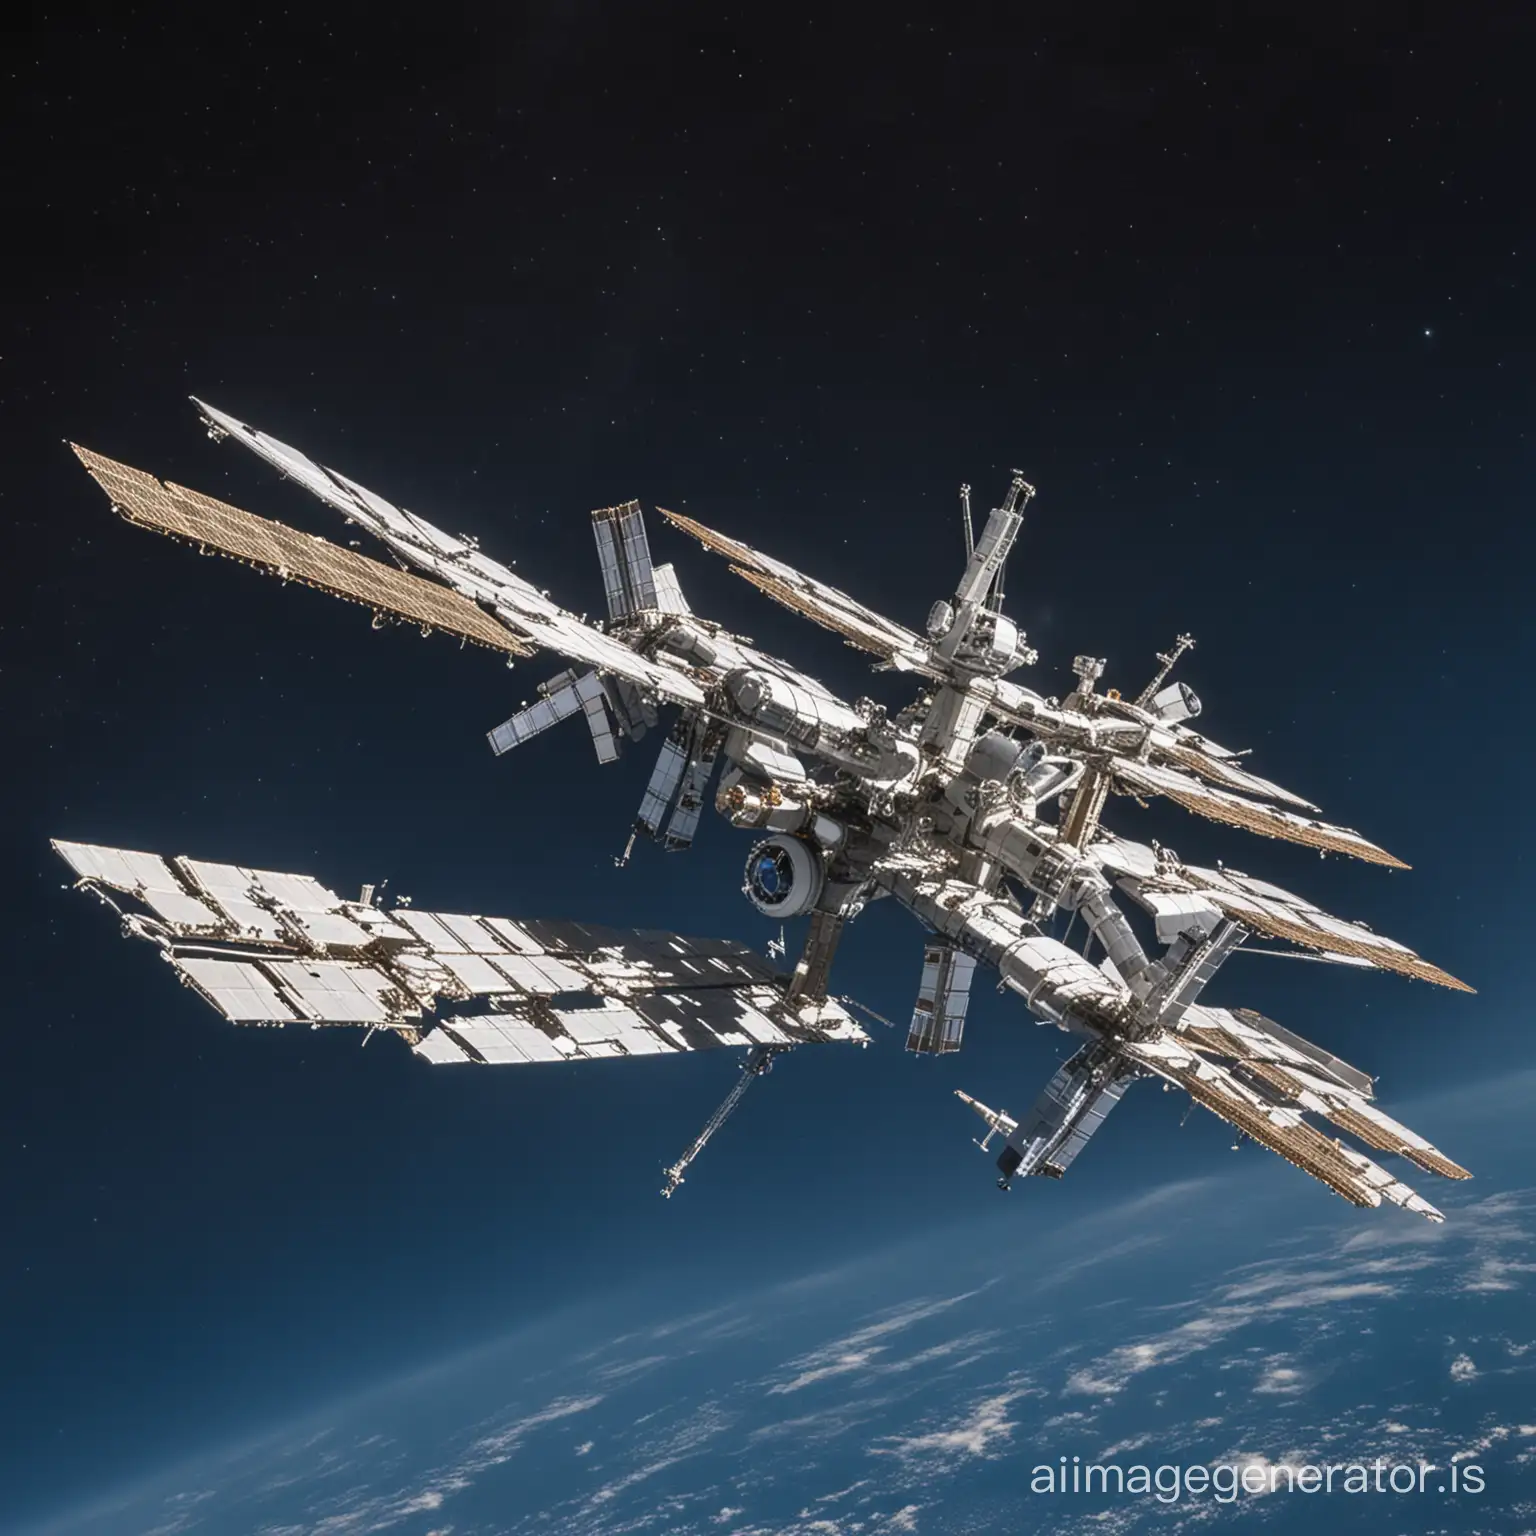 internation space station